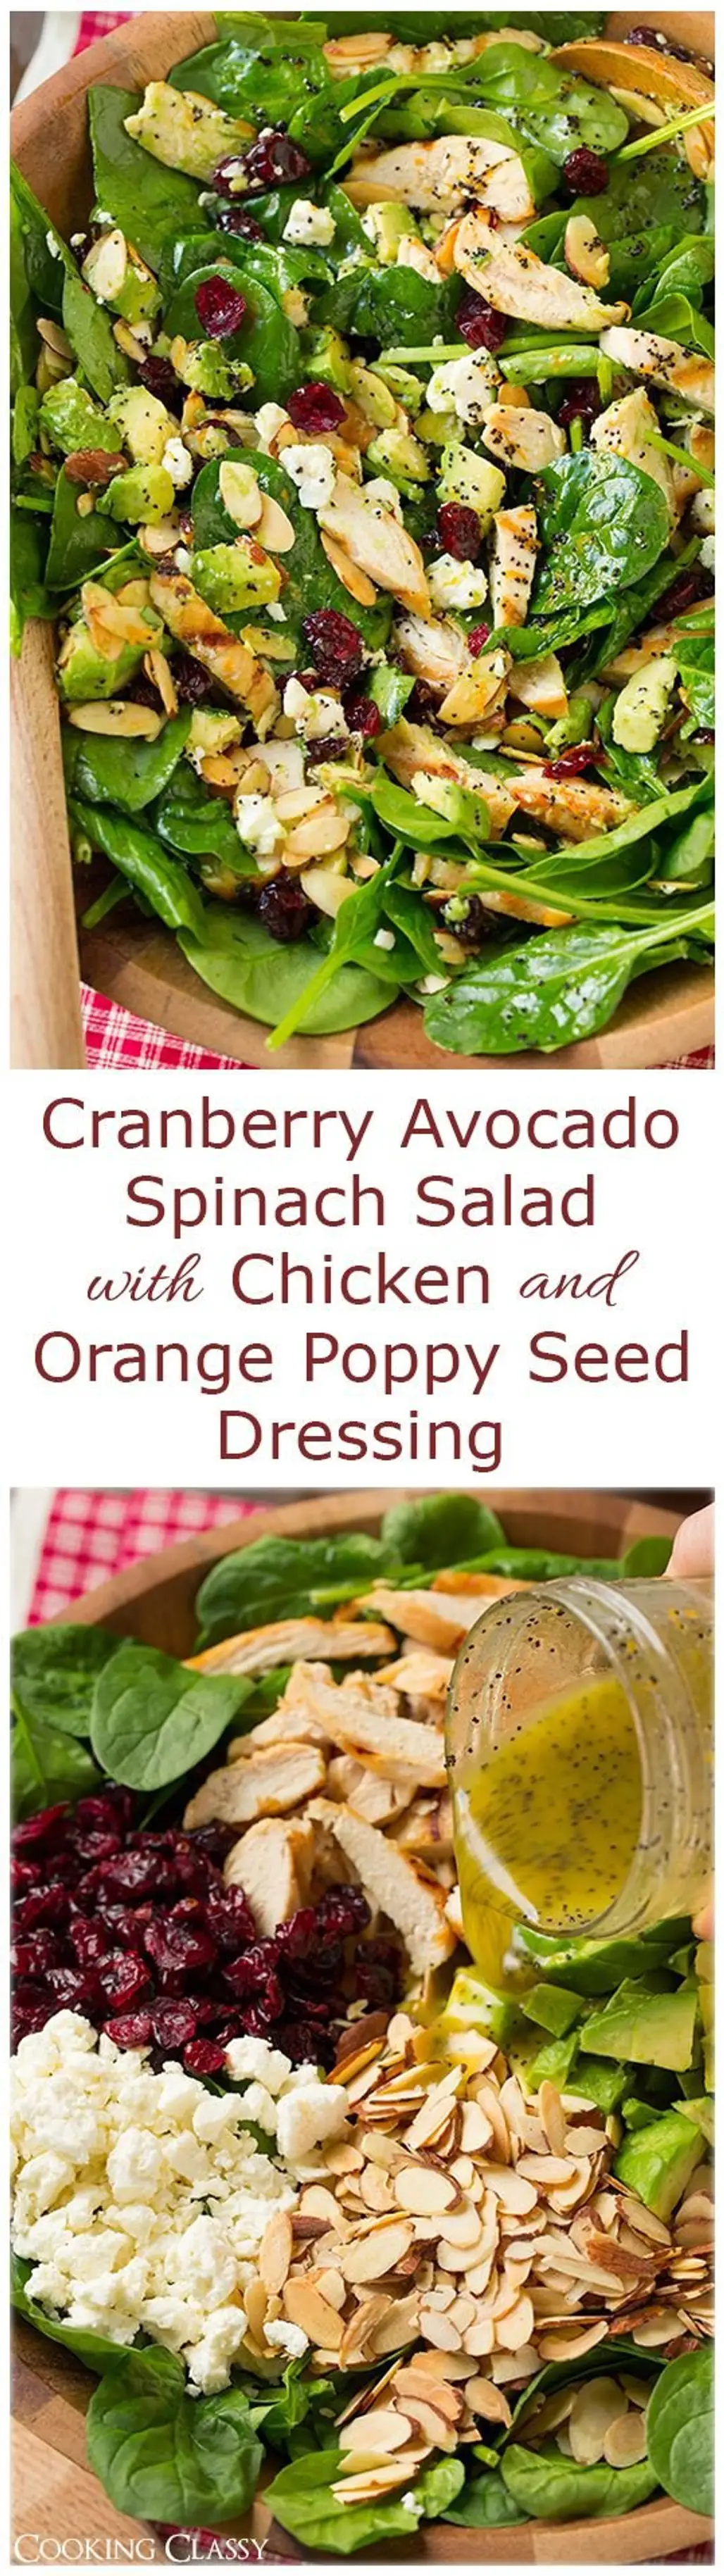 Cranberry Avocado Spinach Salad